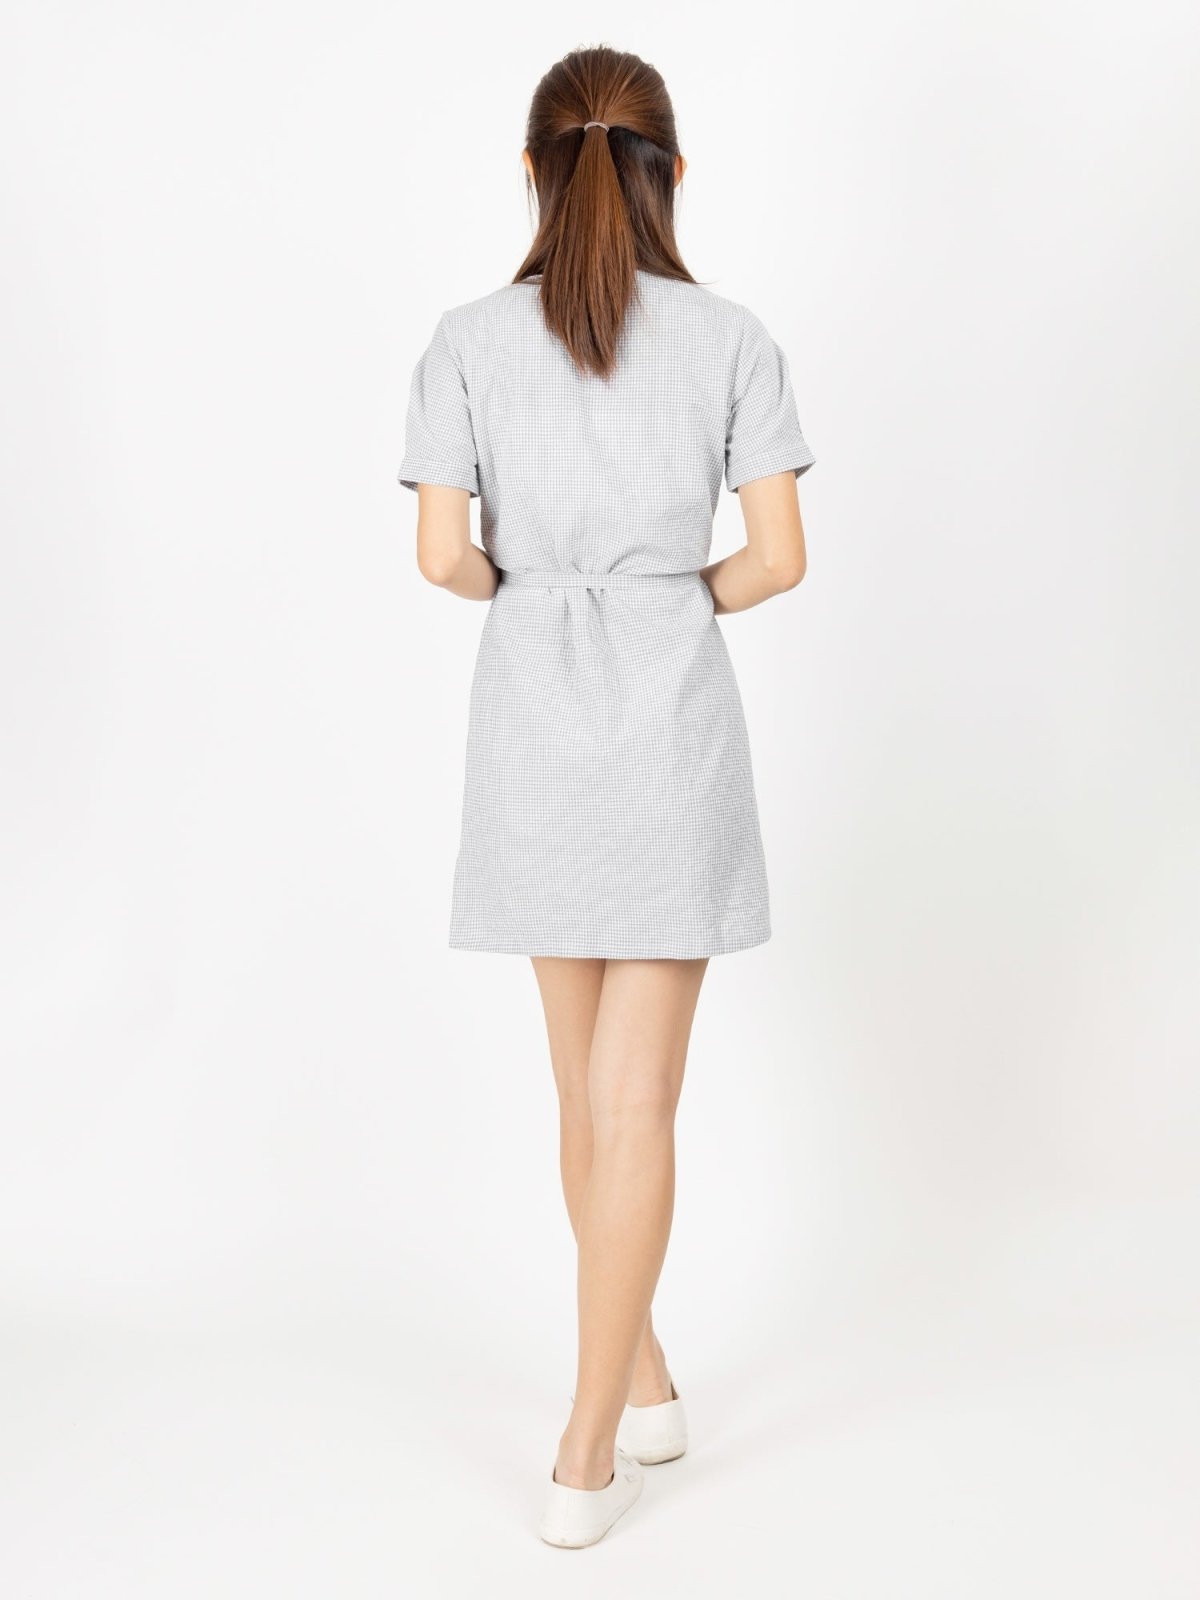 Kye Plaid Wrap Mini Dress - DAG-DD9476-22GrayGinghamF - Gray - F - D'ZAGE Designs